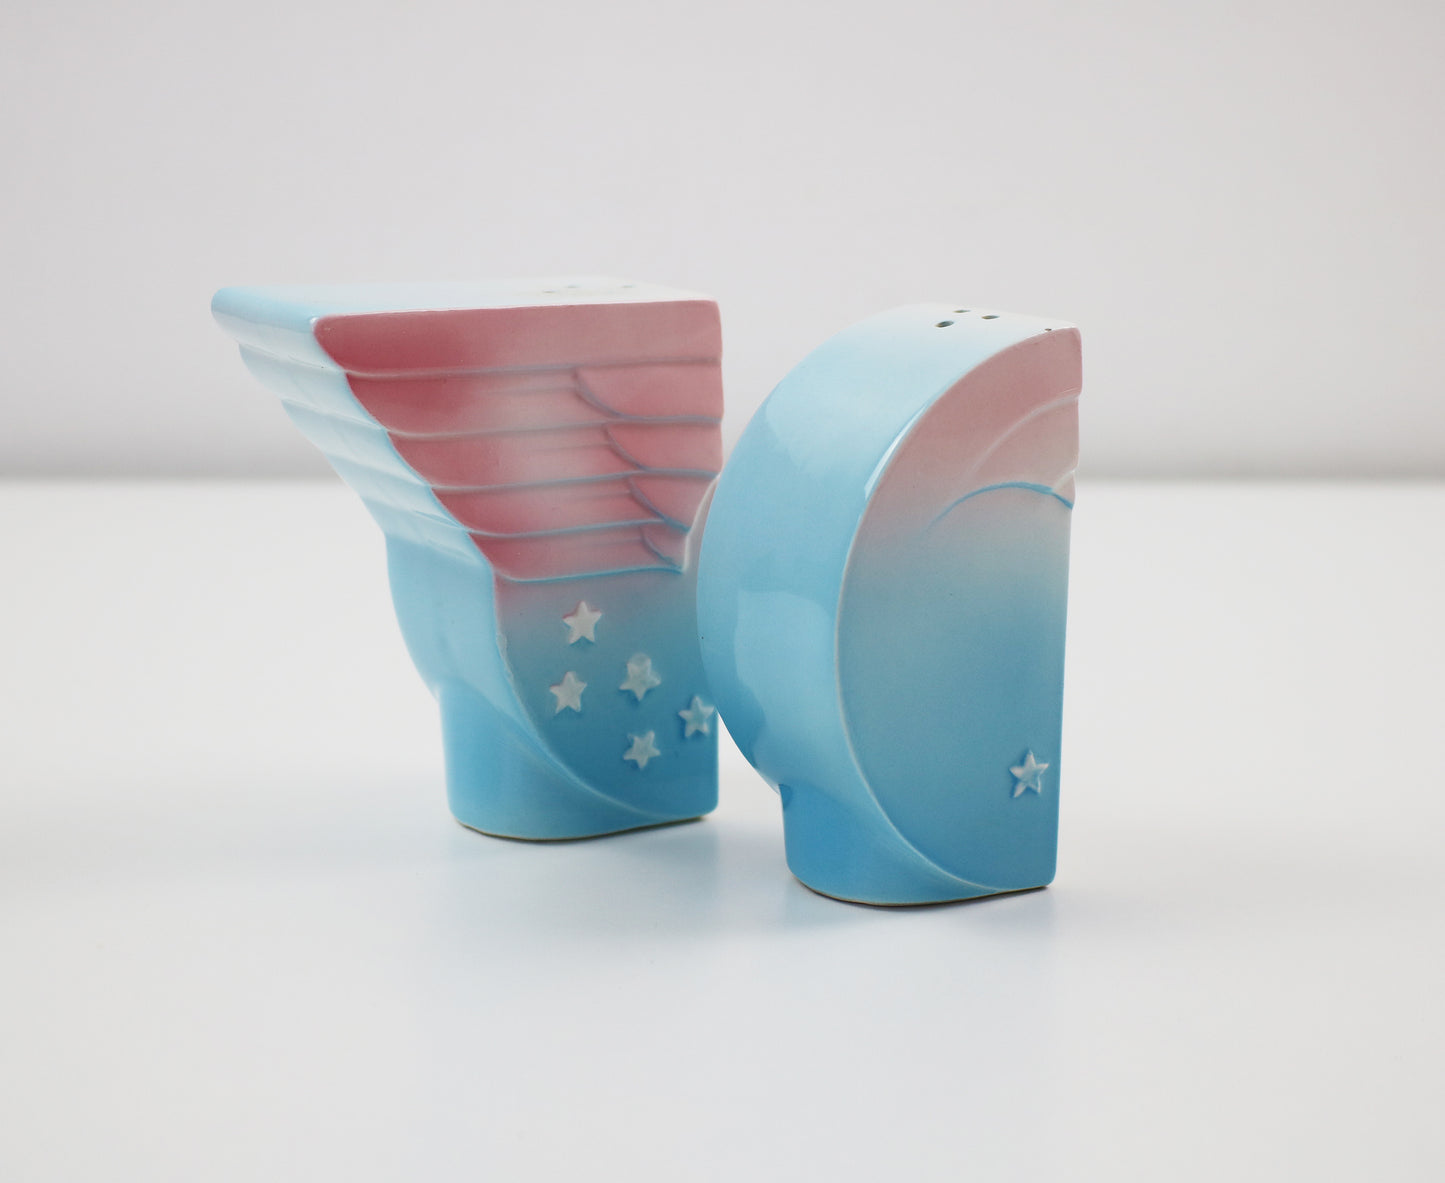 Wings and Stars salt and pepper shaker set by Pelzman Designs for Vandor.